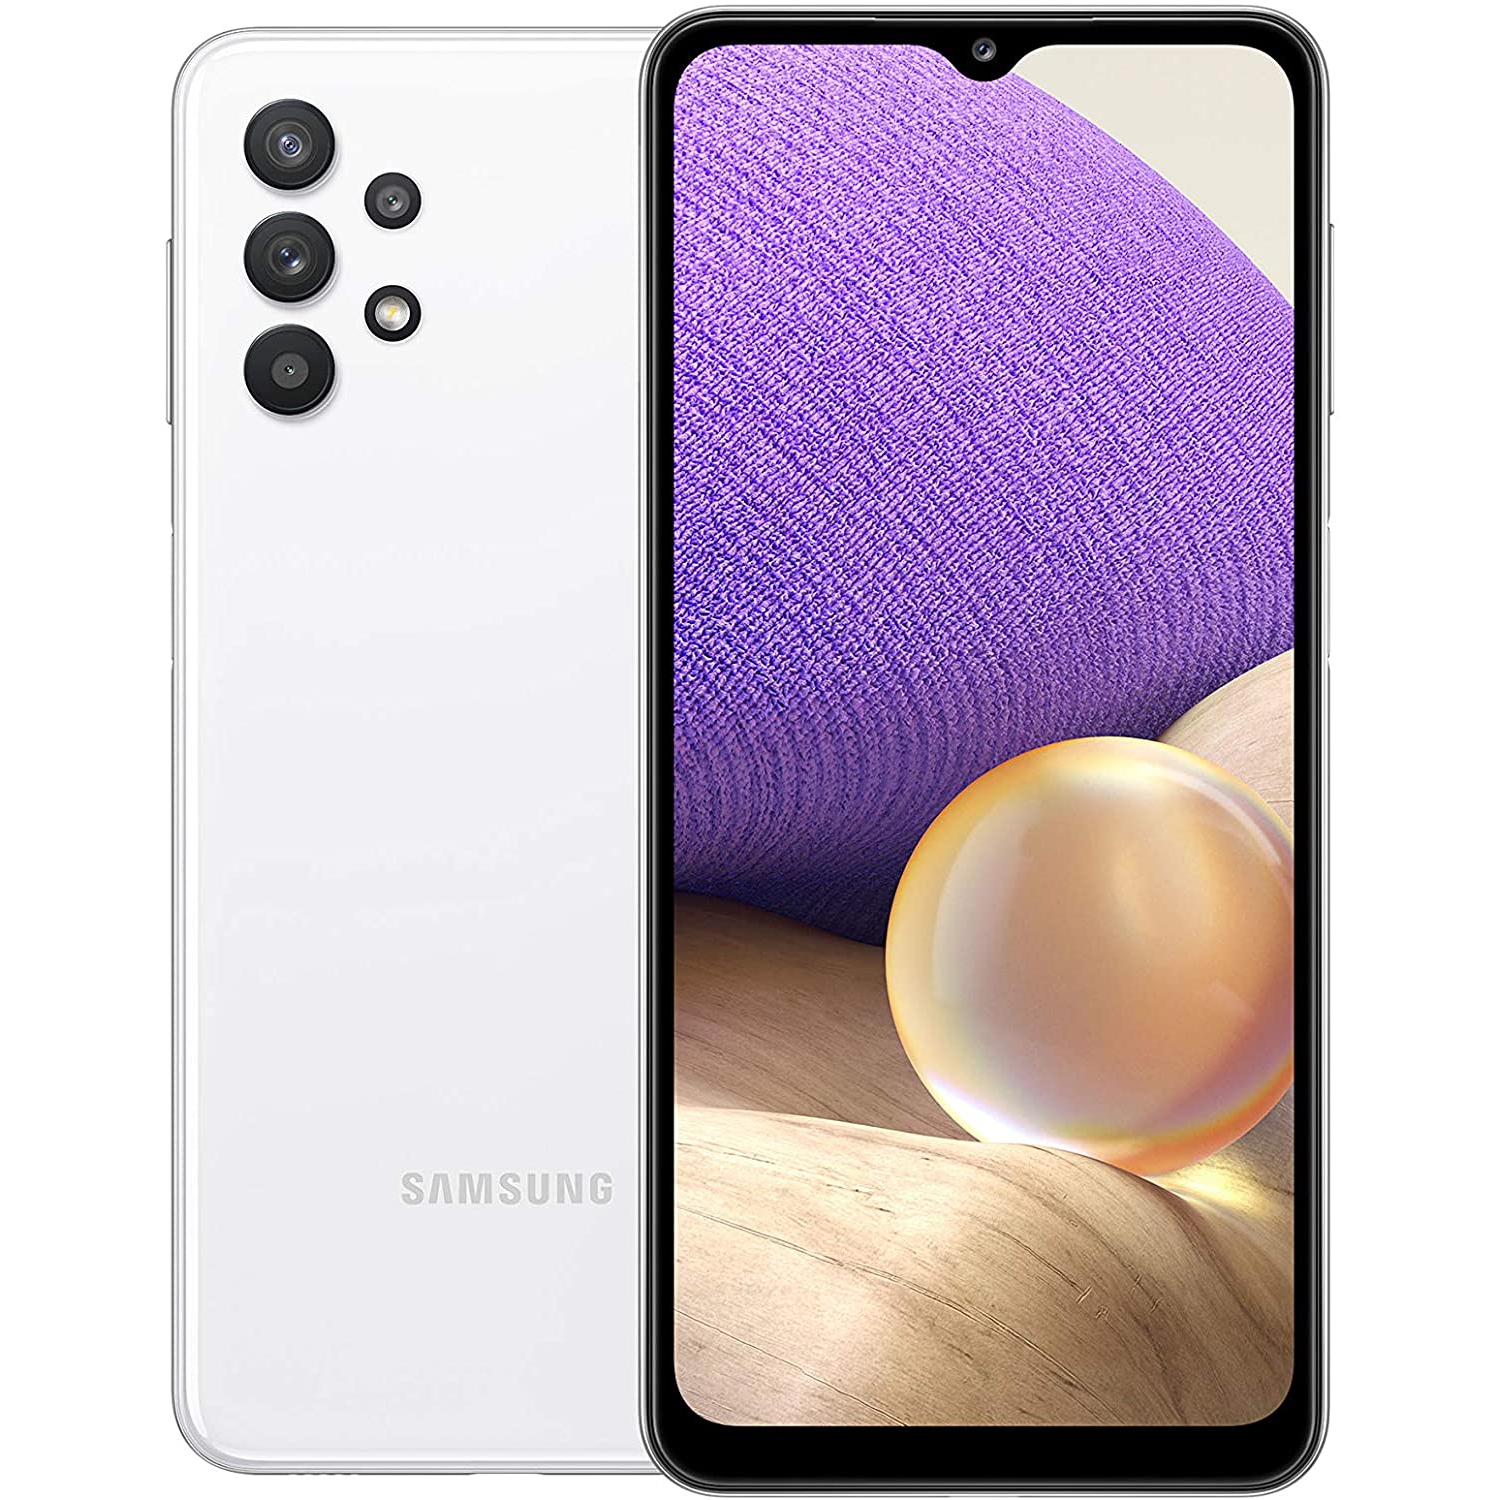 Samsung Galaxy A32 (128GB, 4GB) 6.4" (SM-A325M/DS) - Dual Sim - Factory Unlocked Smartphone -Brand New - Awesome White